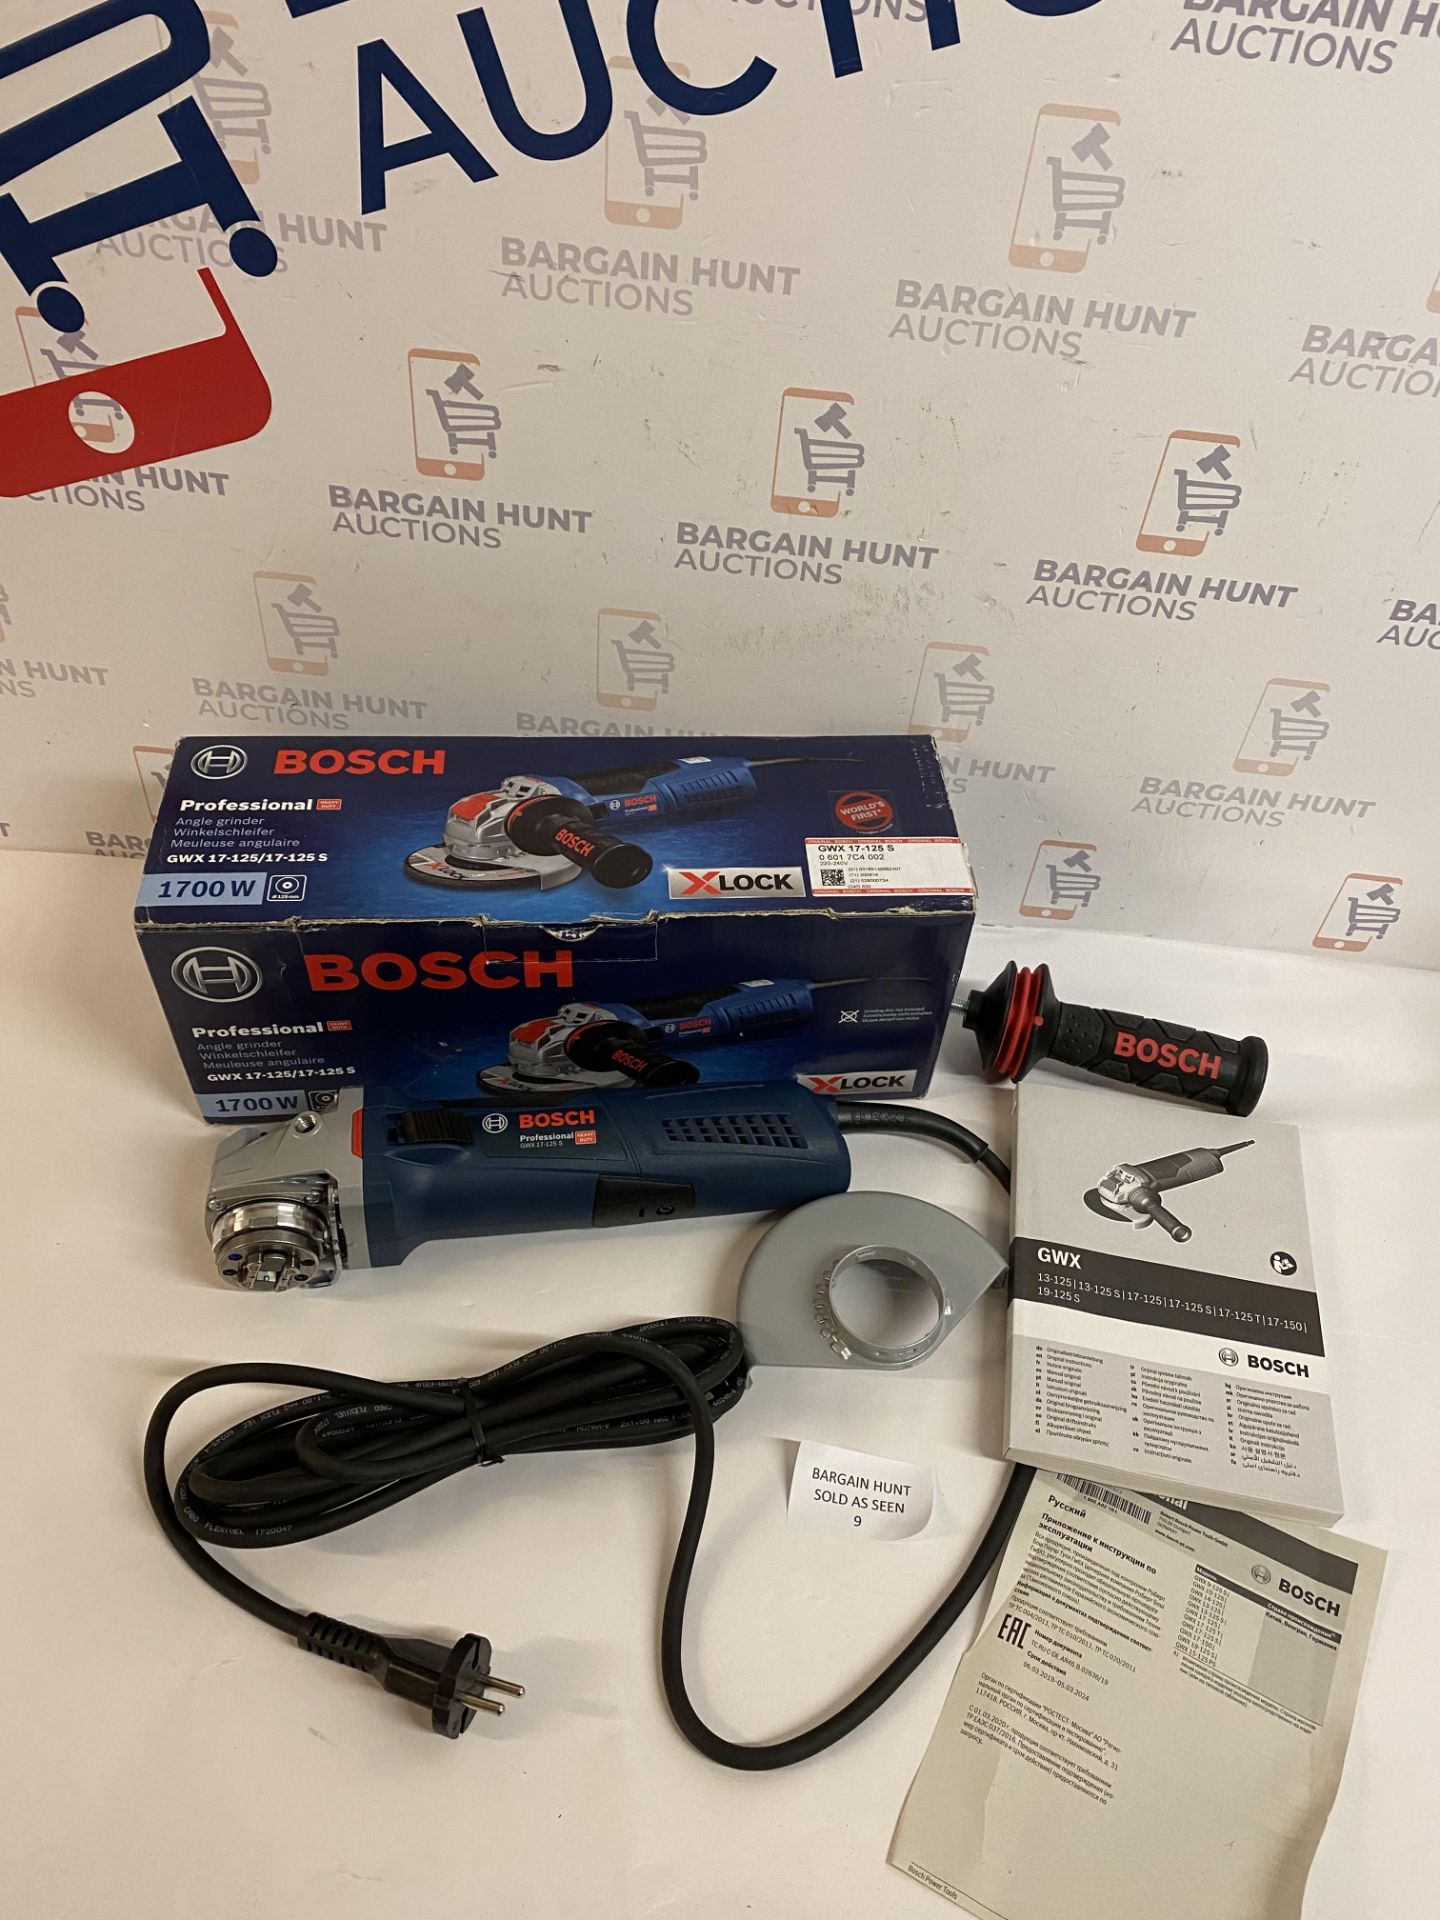 Bosch Professional GWX 17-125/17-125 S Angle Grinder (EU plug) RRP £180 - Image 2 of 2